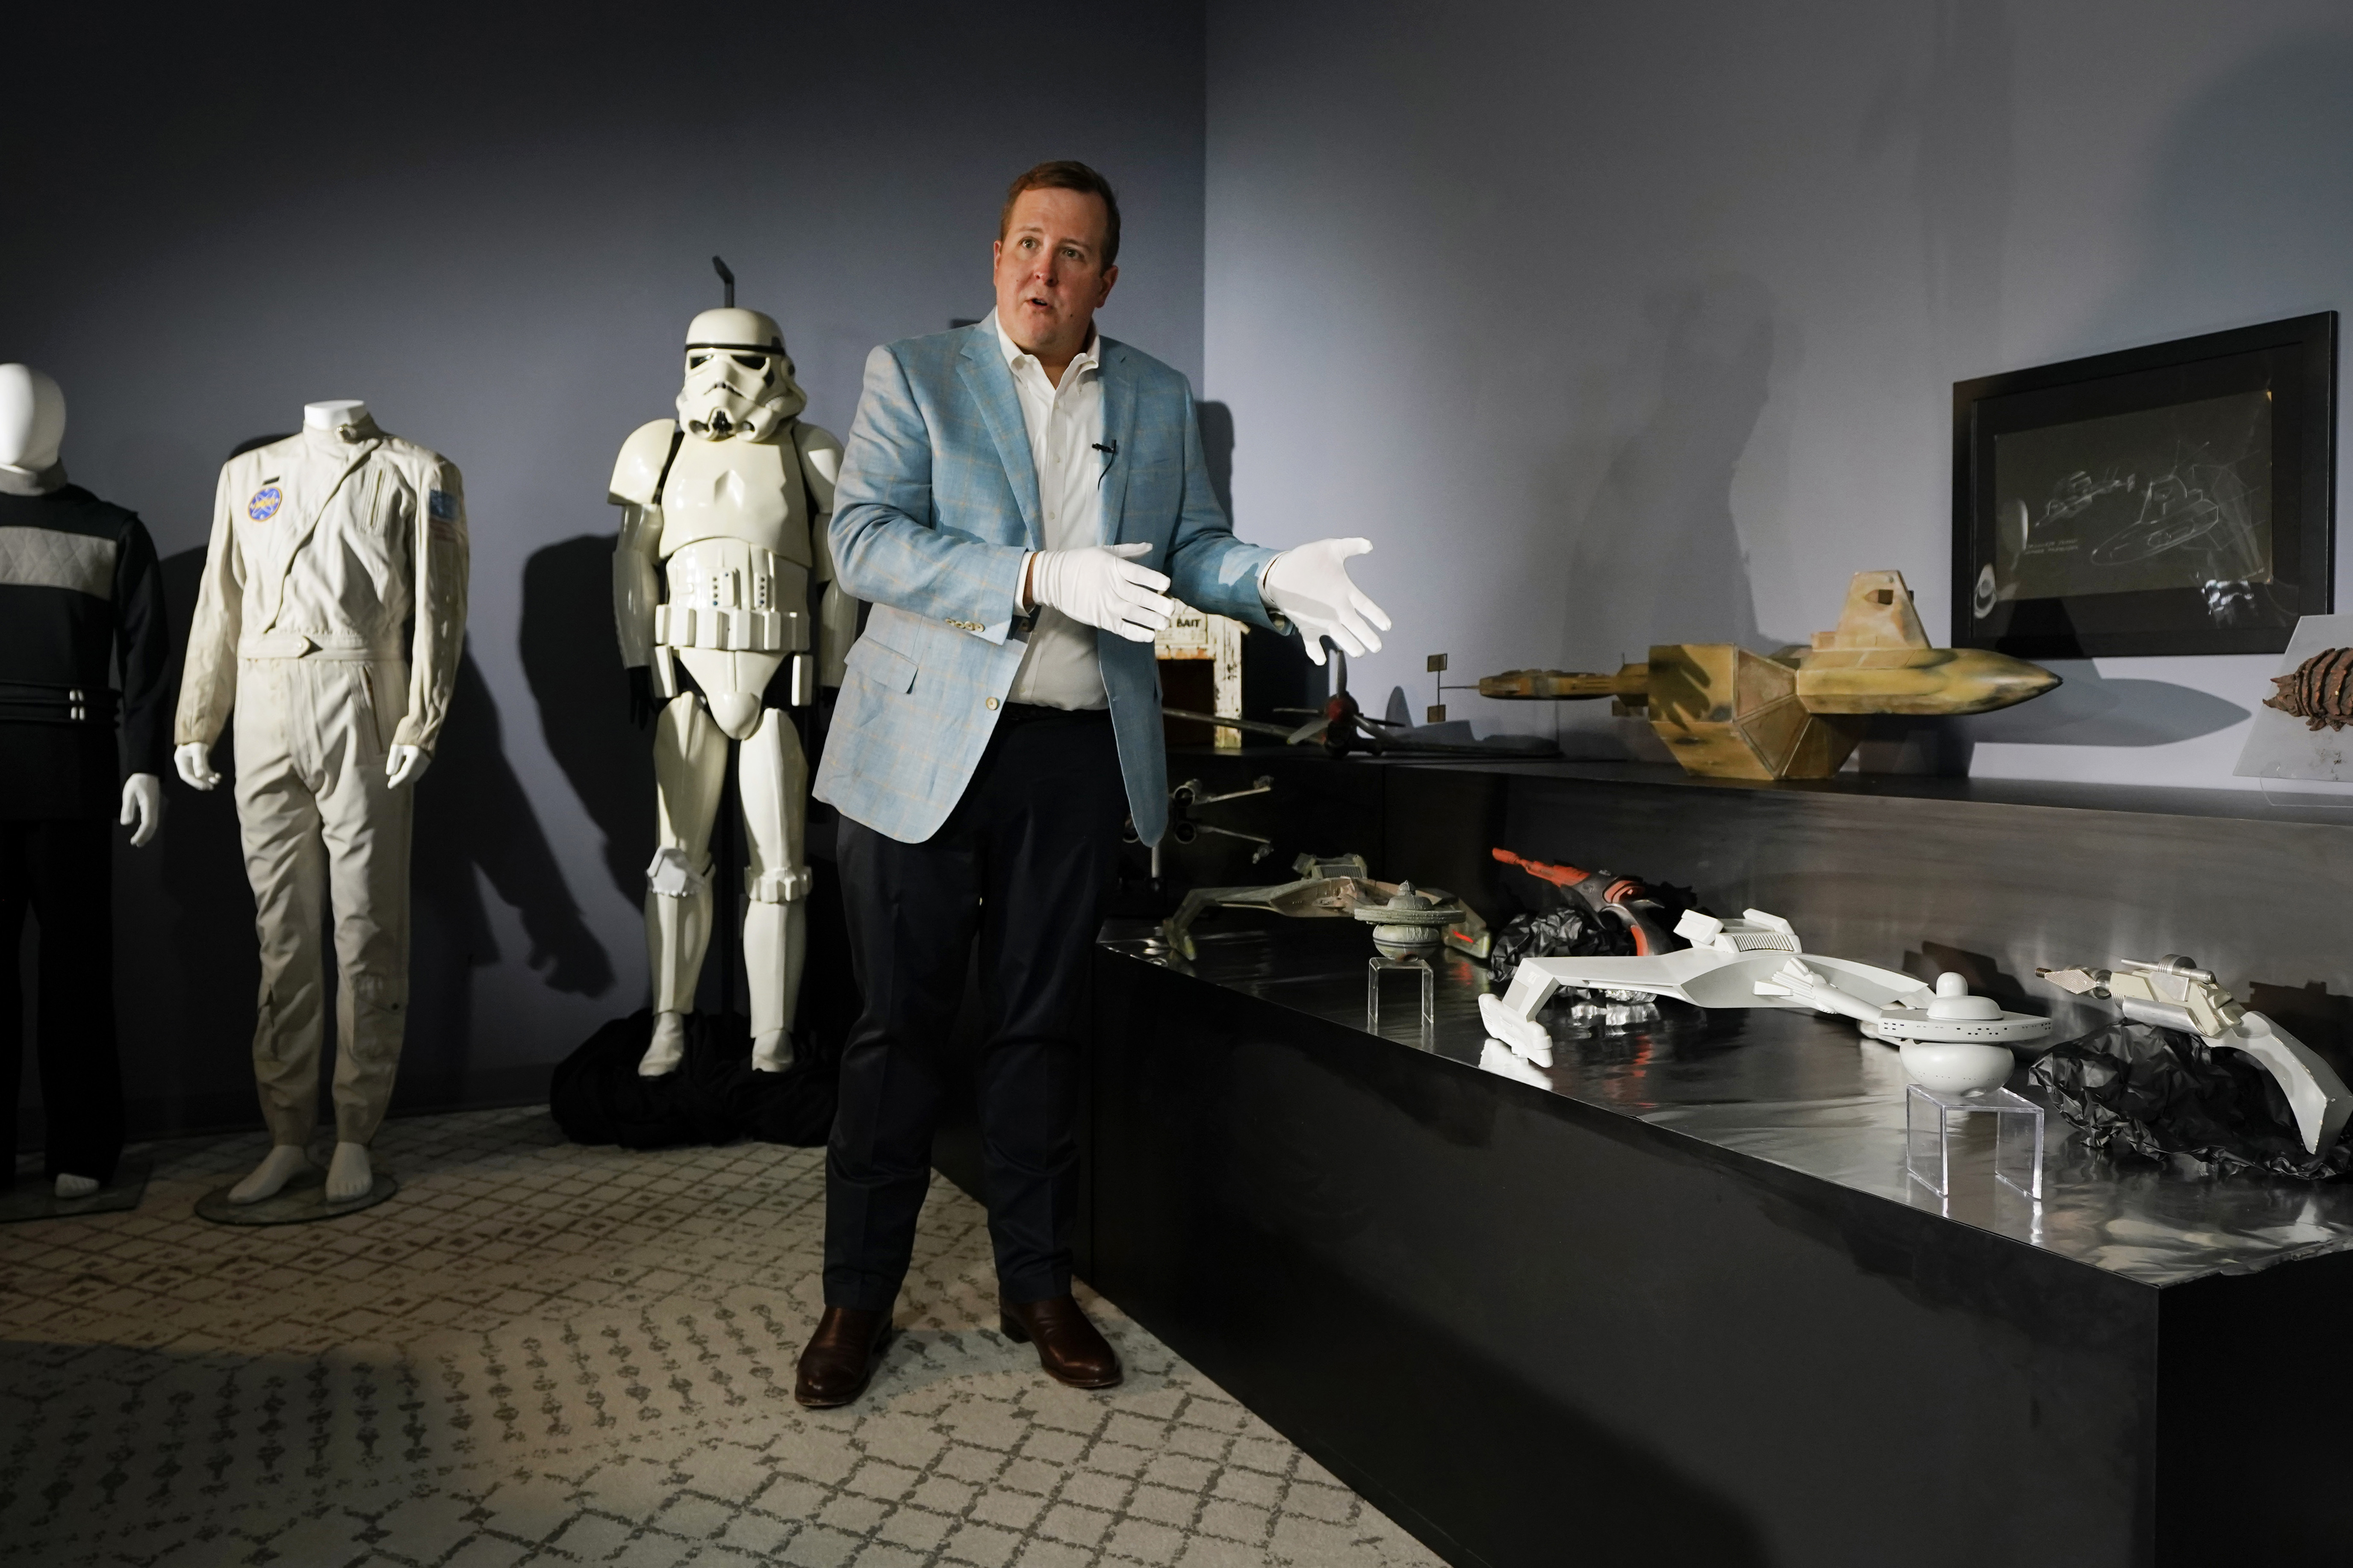 Star Wars Memorabilia Auctions